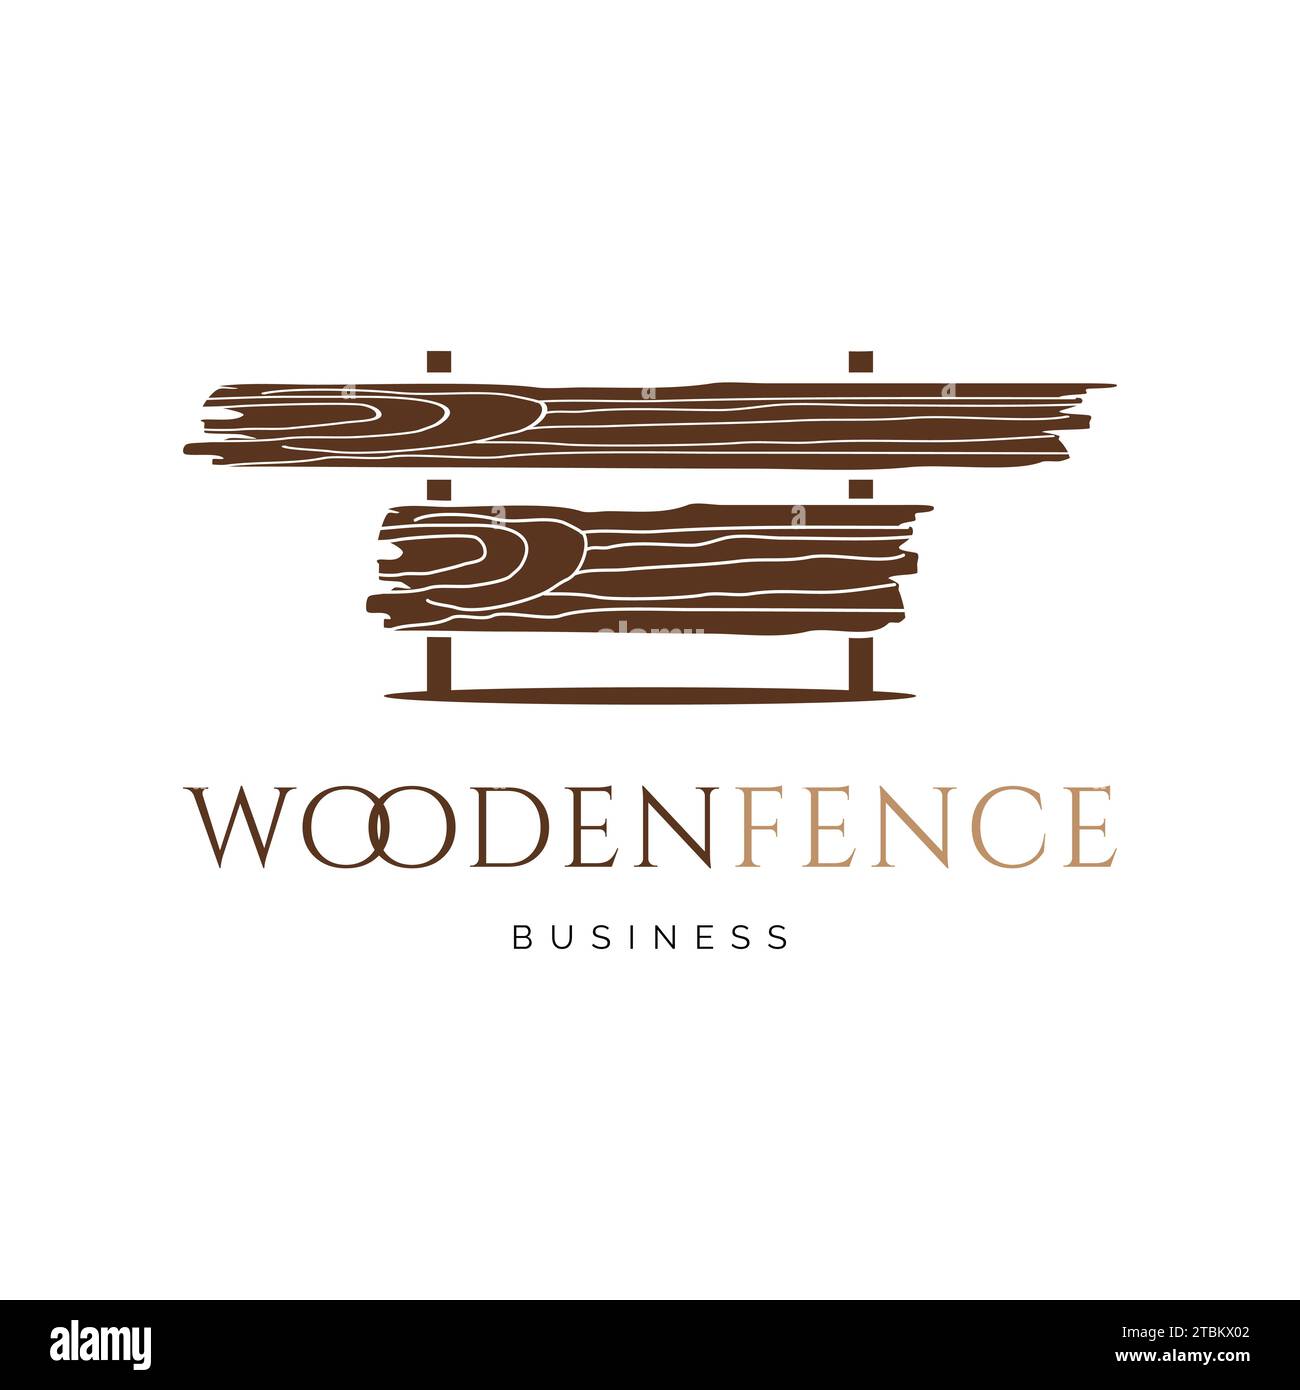 Wooden fence icon logo design inspiration Stock Vector